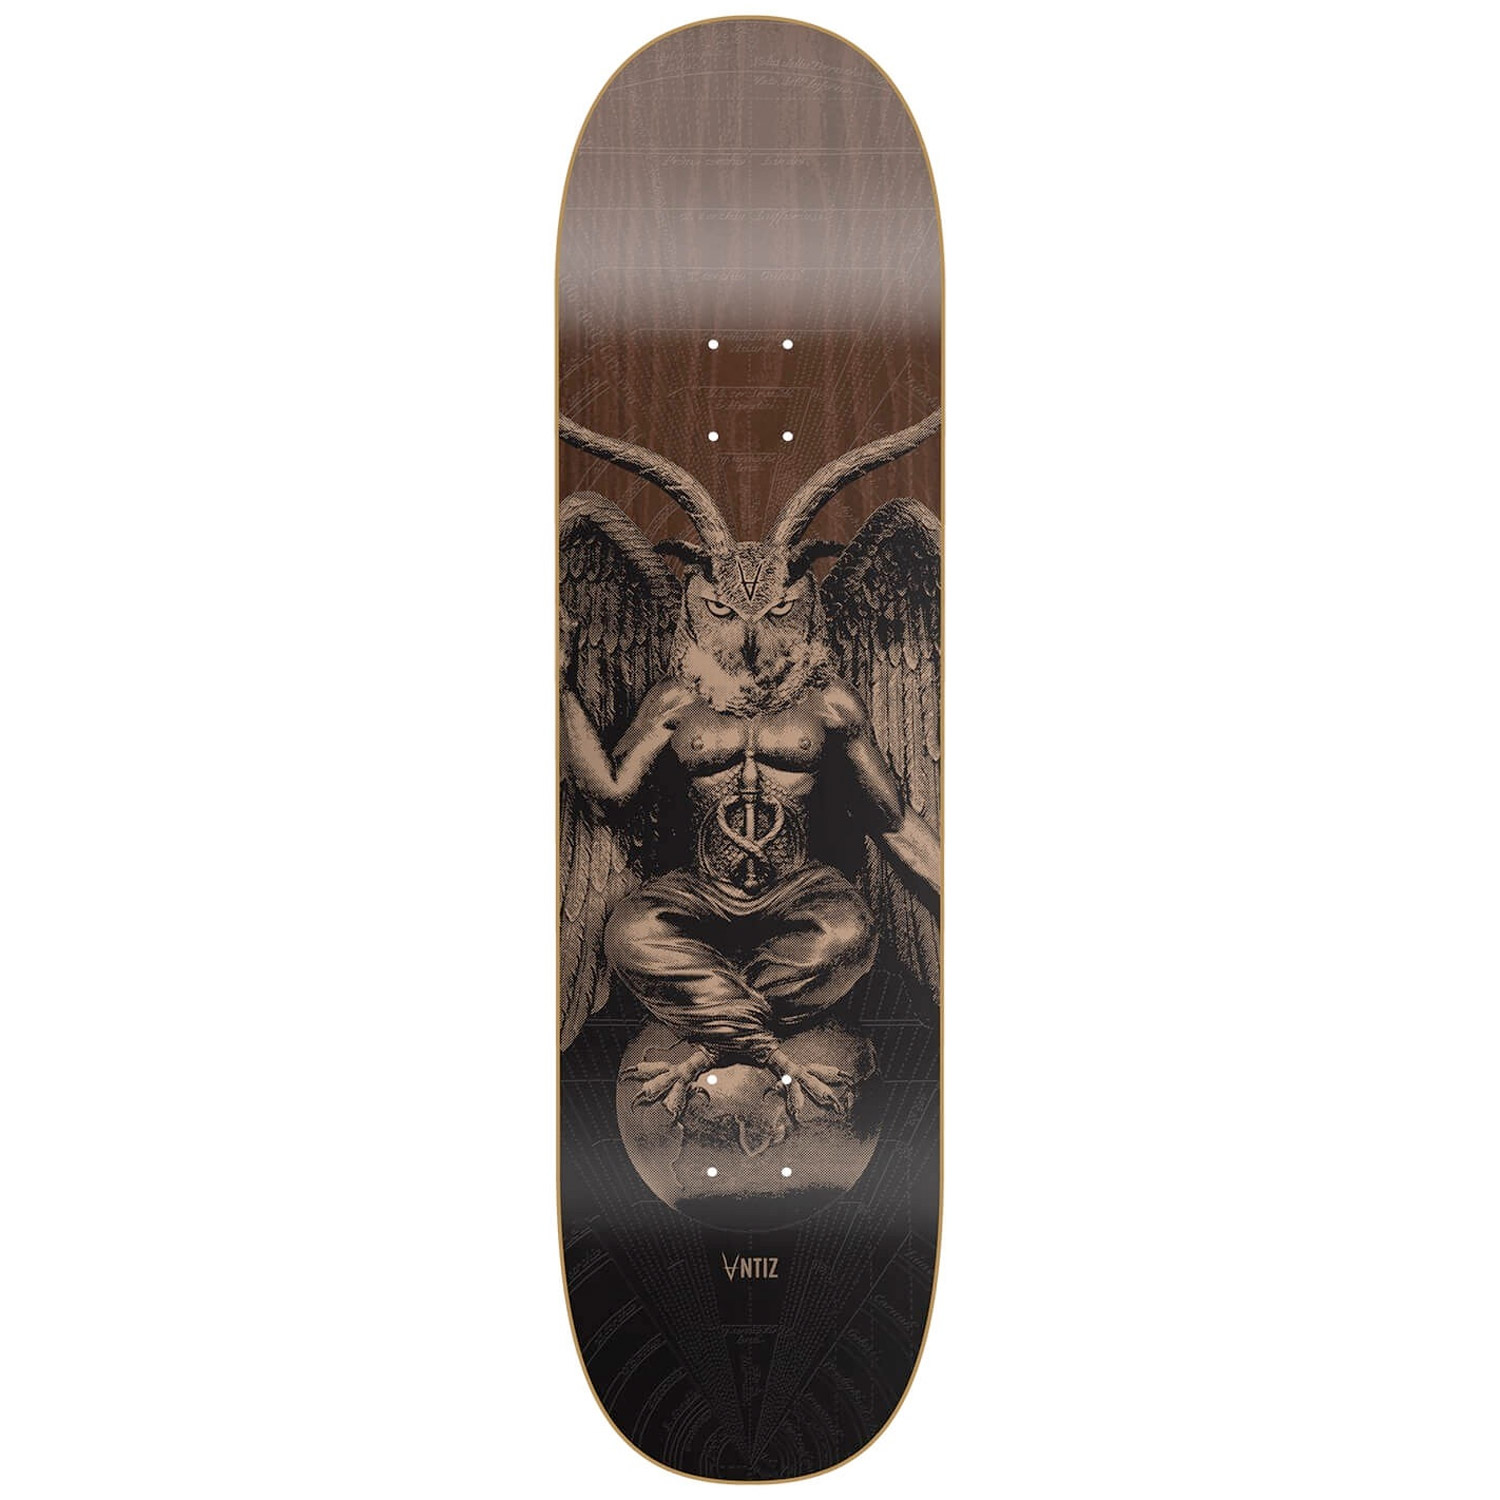 Antiz Skateboard Deck Baphowlmet V2 8.75" (bronze)